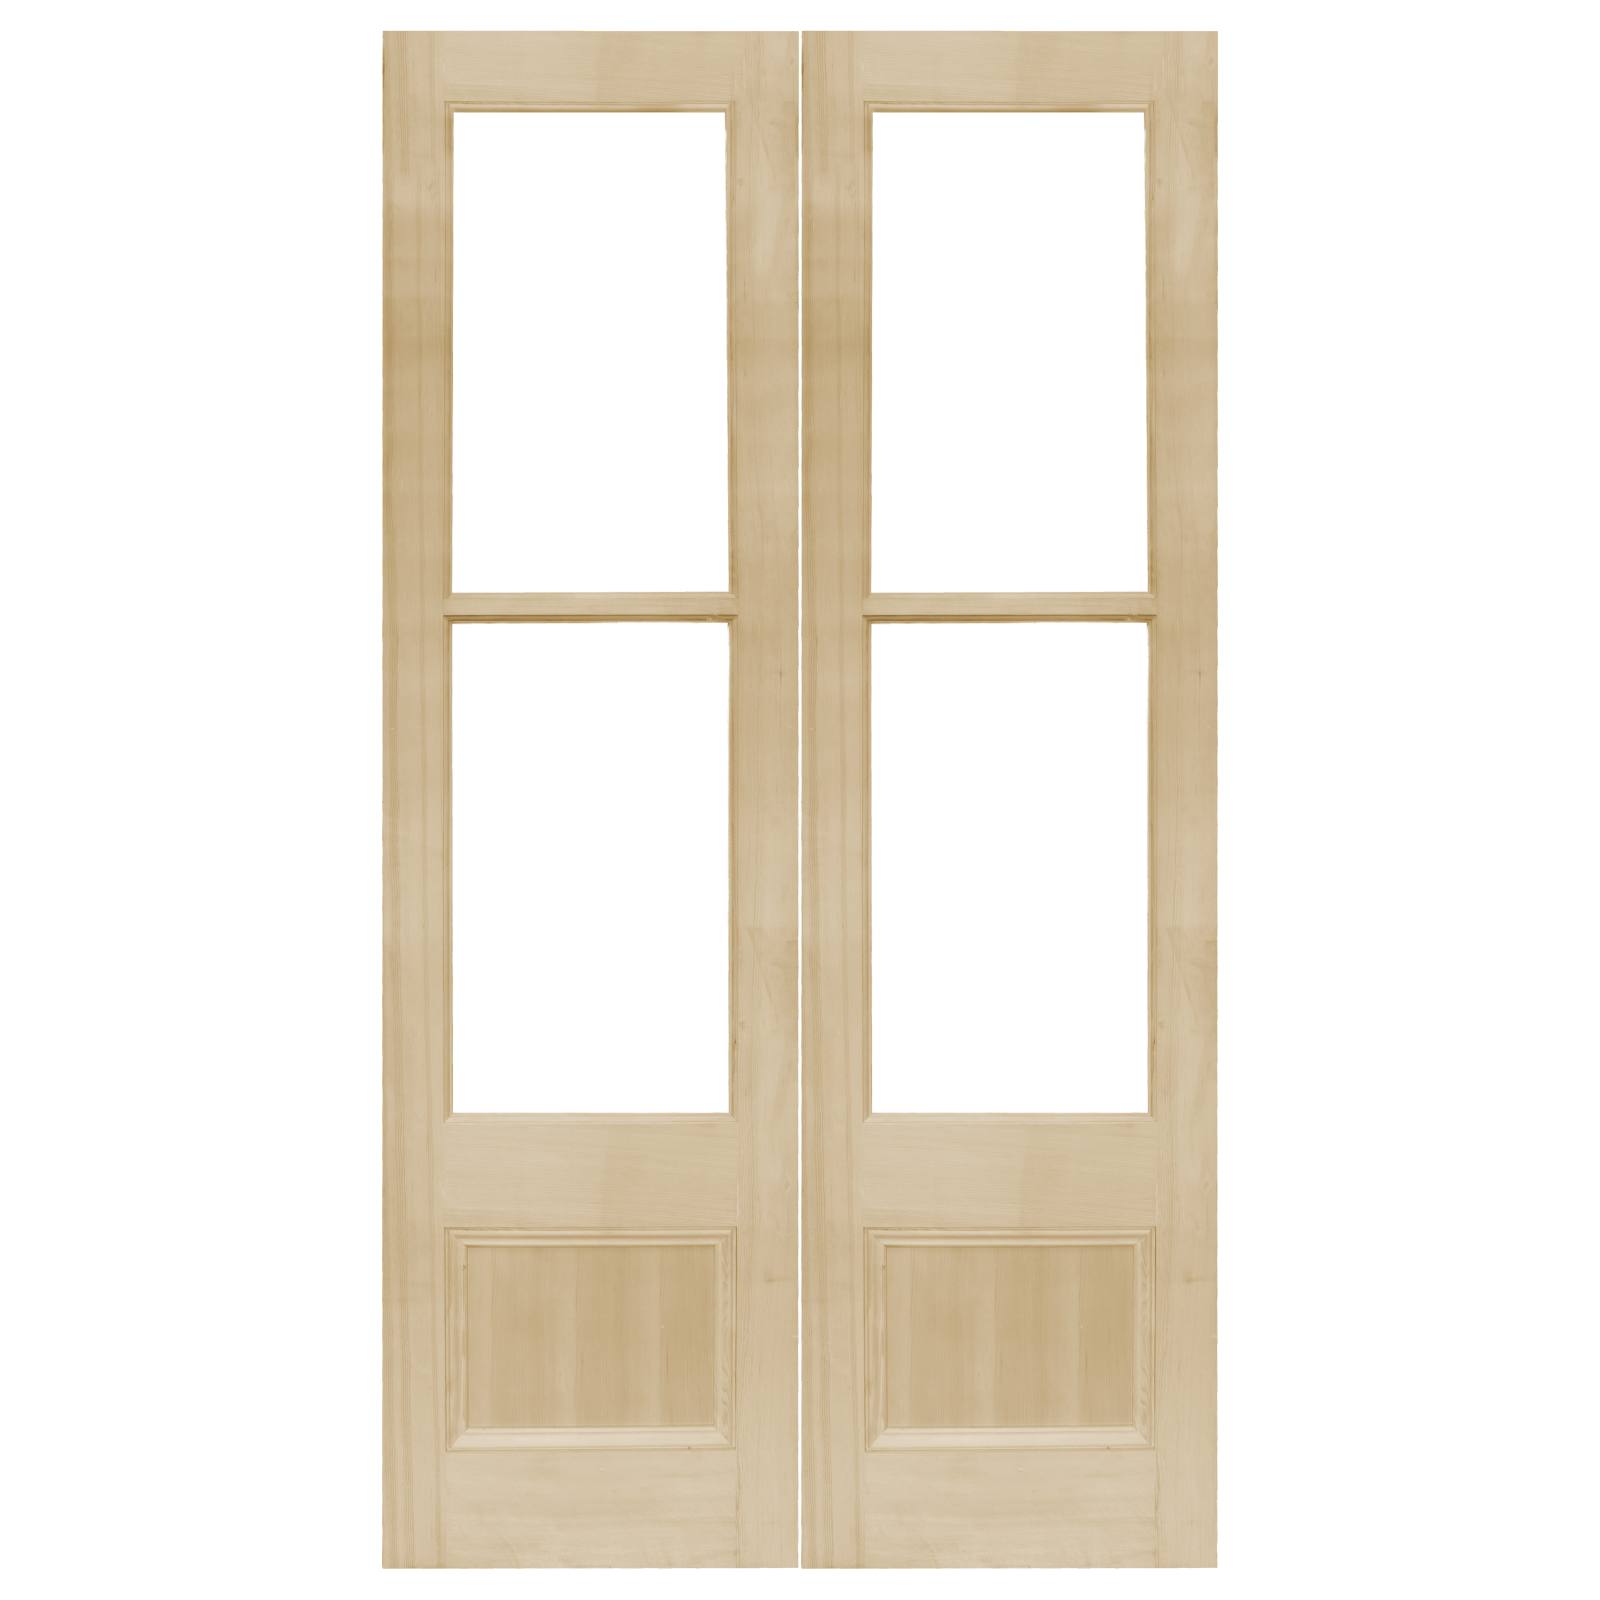 Pair of Tall Internal Glazed French 62cm Doors,Raw